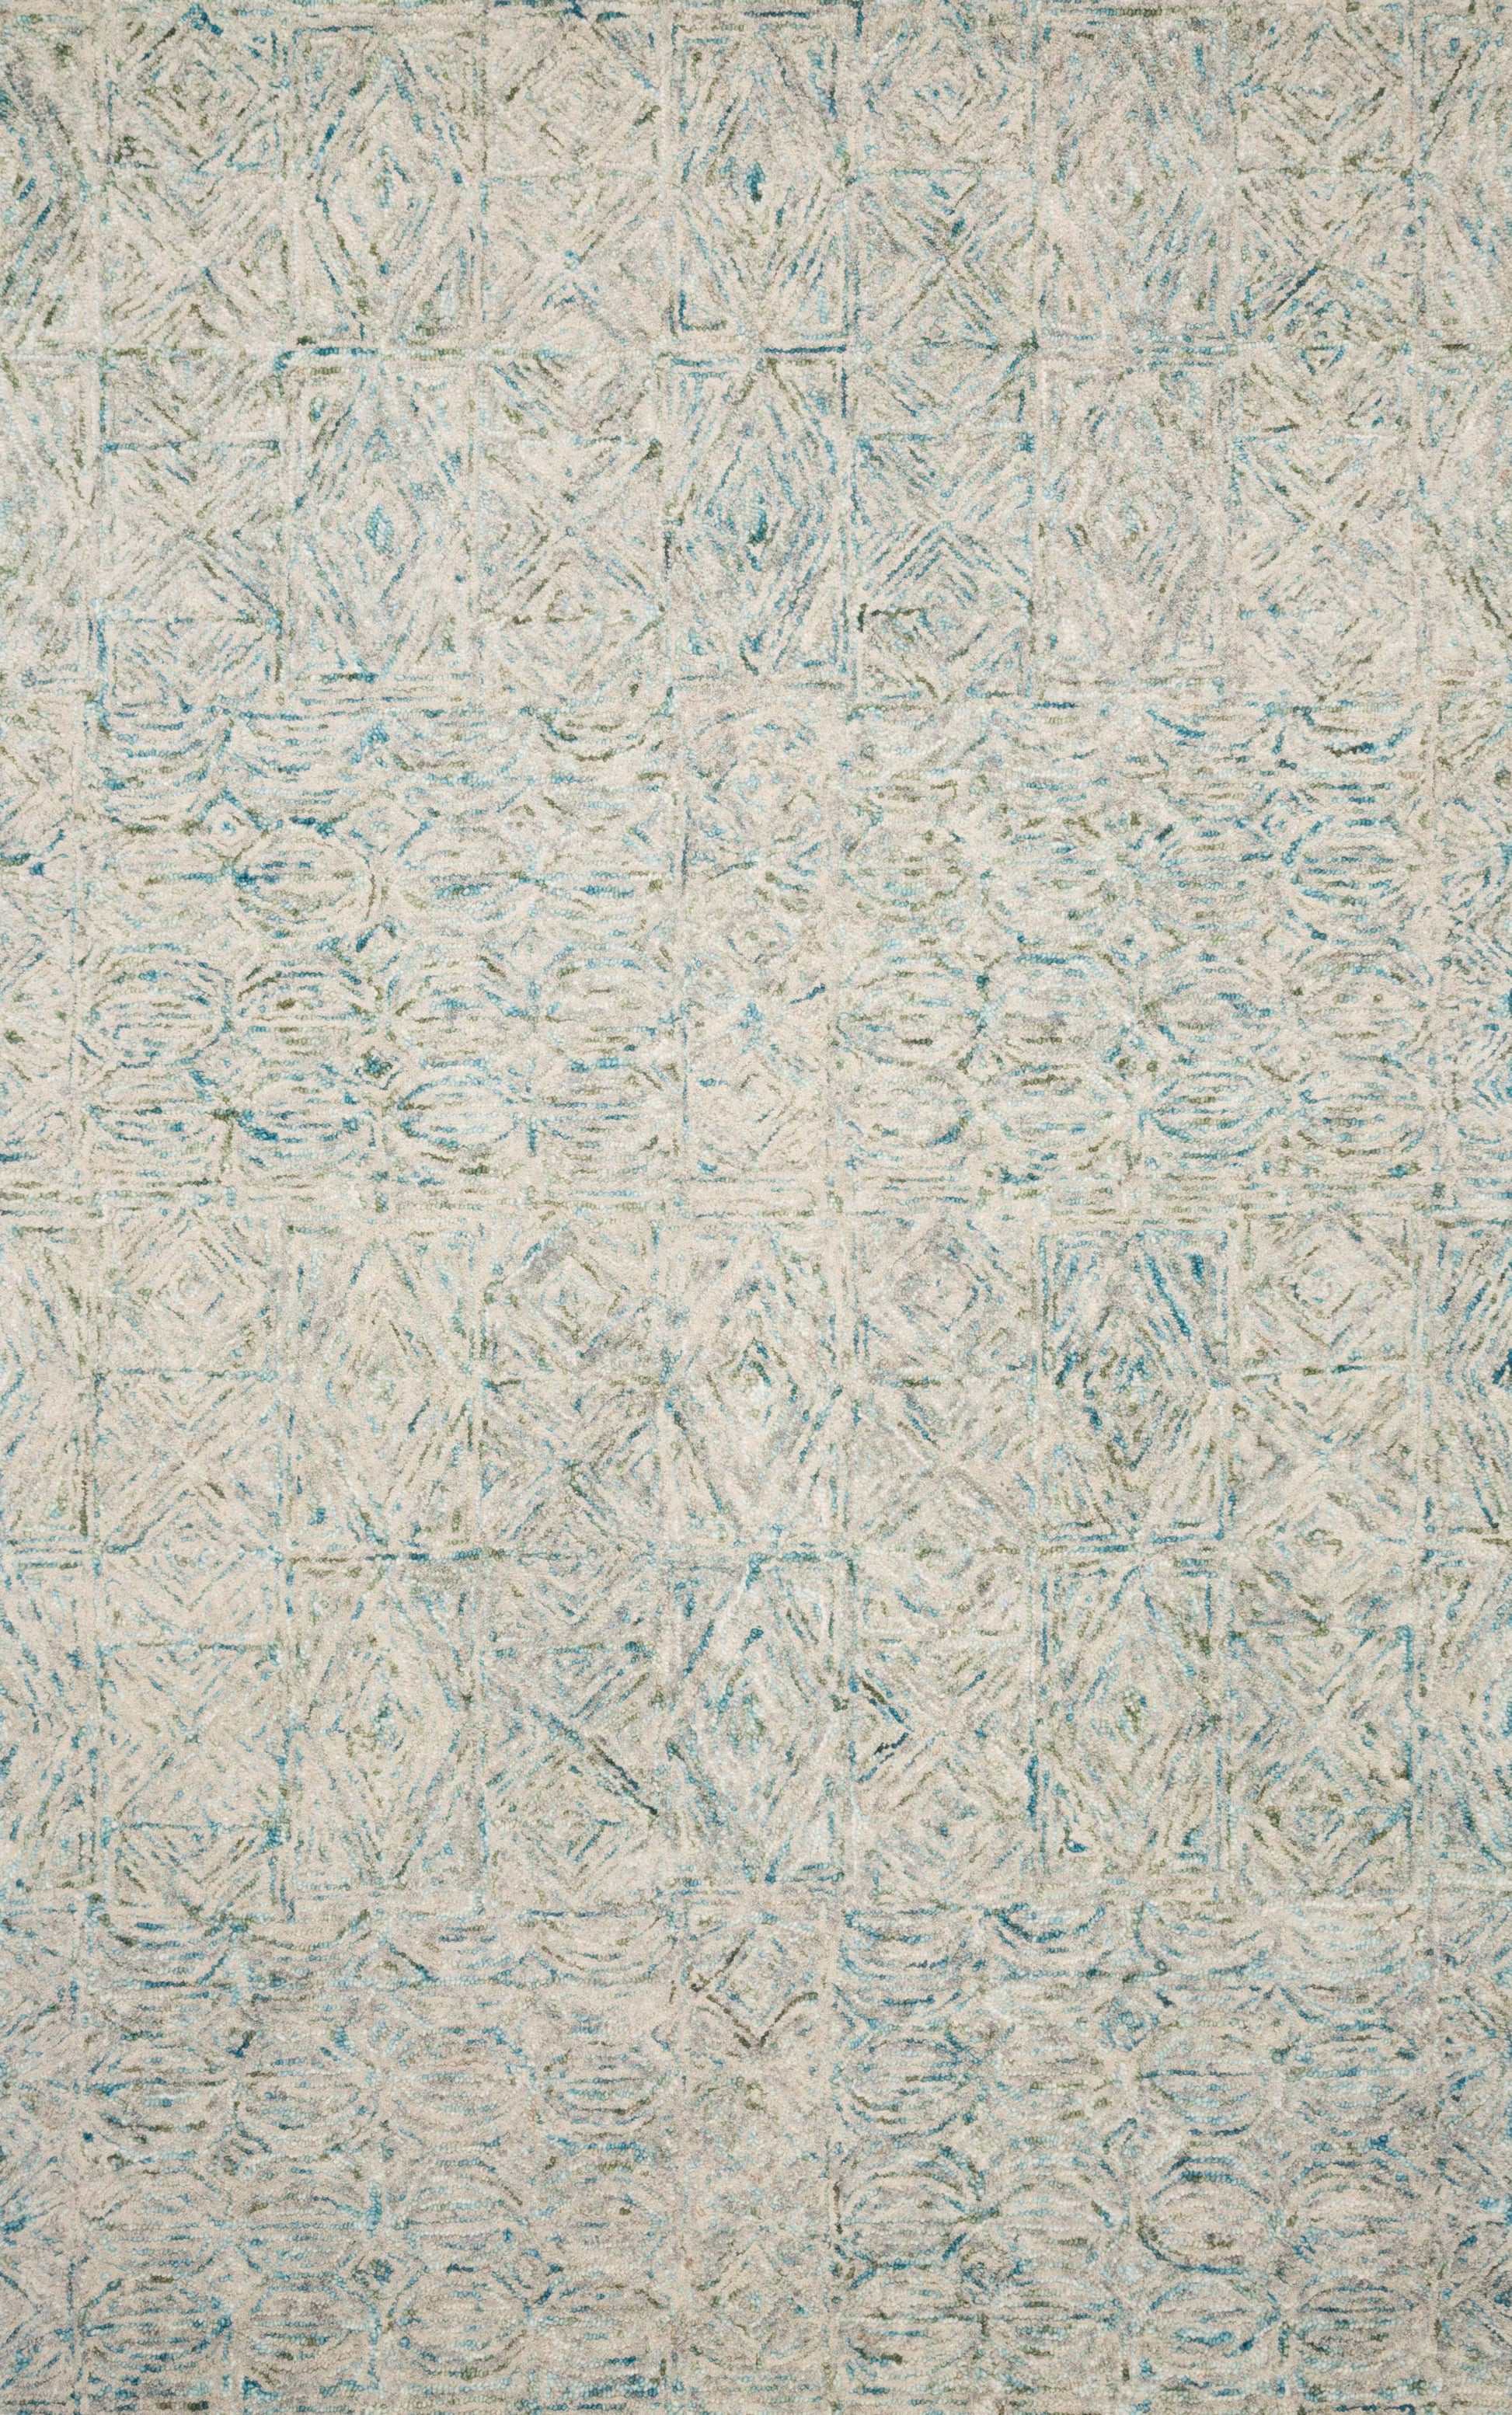 A picture of Loloi's Peregrine rug, in style PER-05, color Aqua